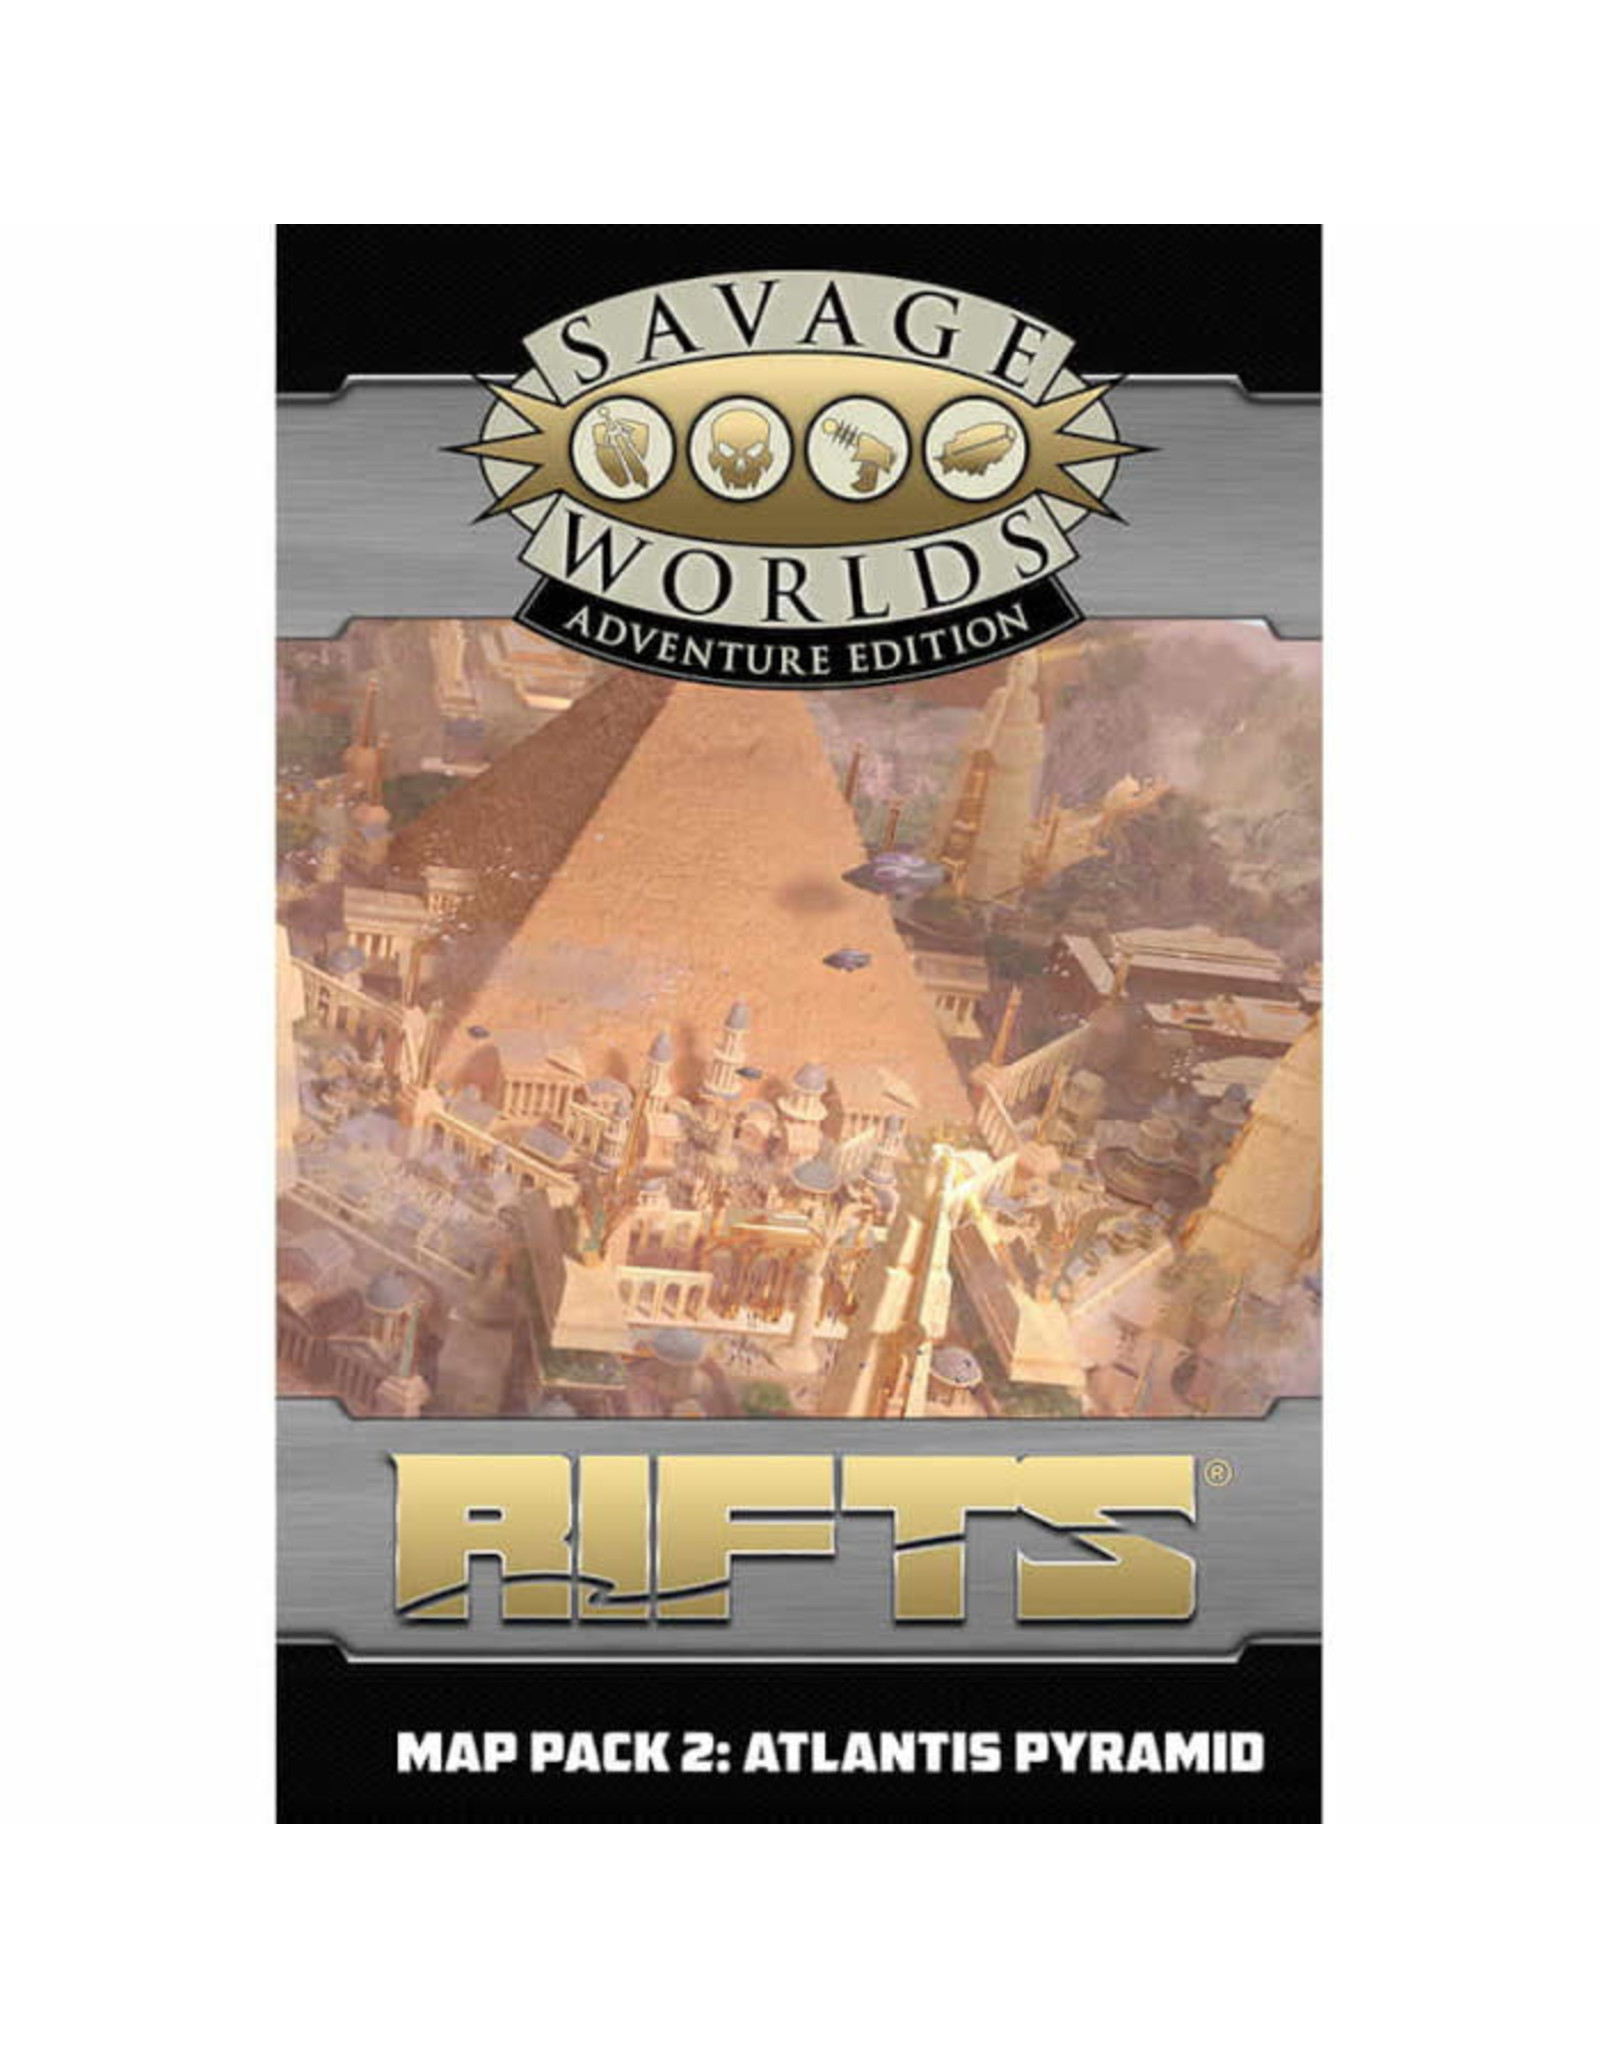 Studio 2 Publishing Savage Worlds RPG: Rifts - Map Pack 2 Atlantis Pyramid